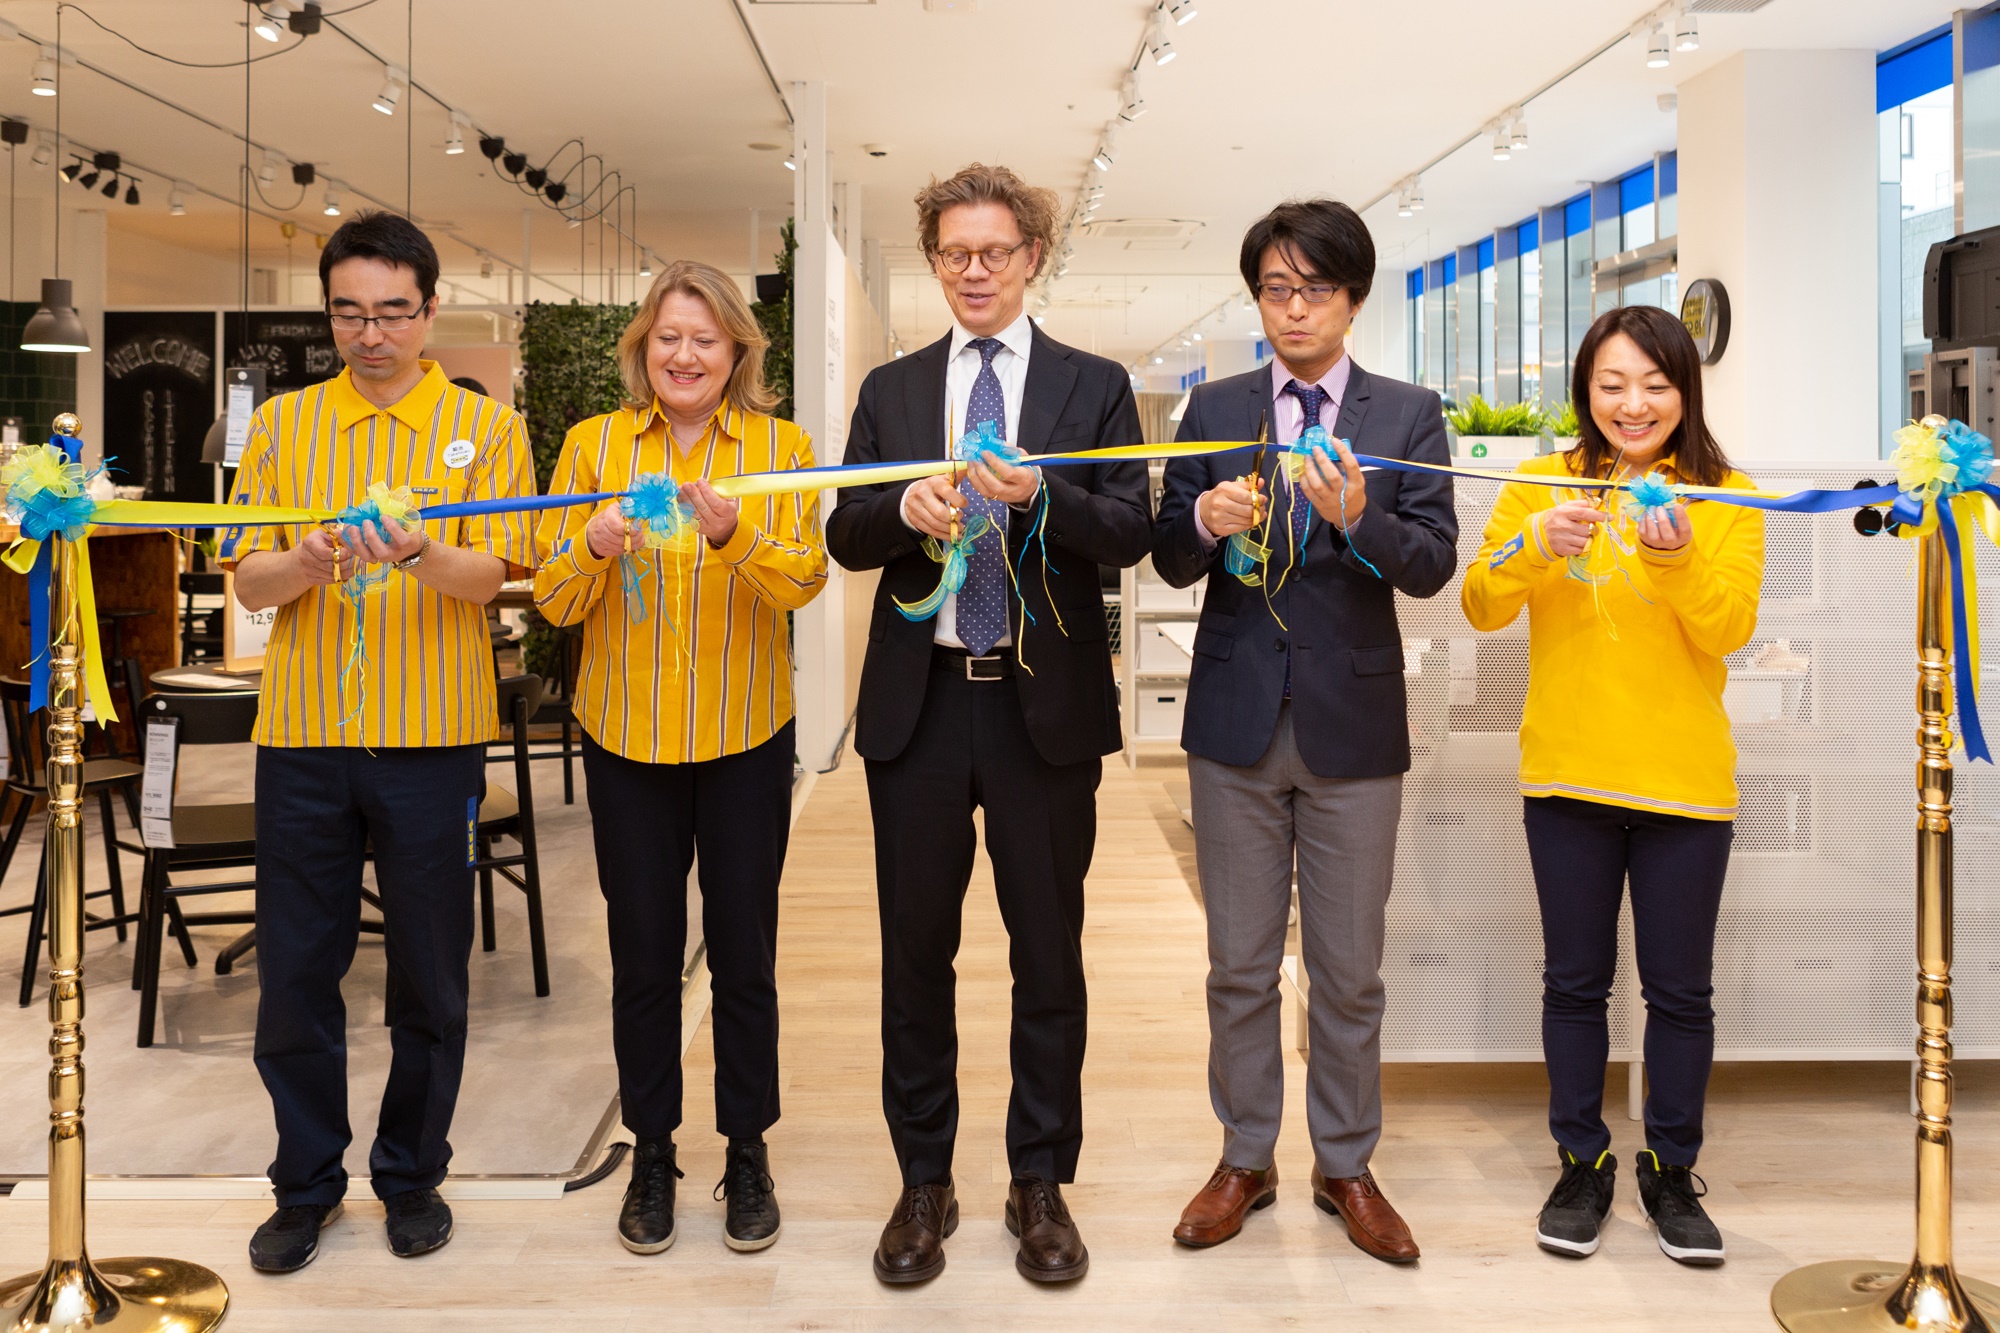 IKEA for Business opened in Shibuya